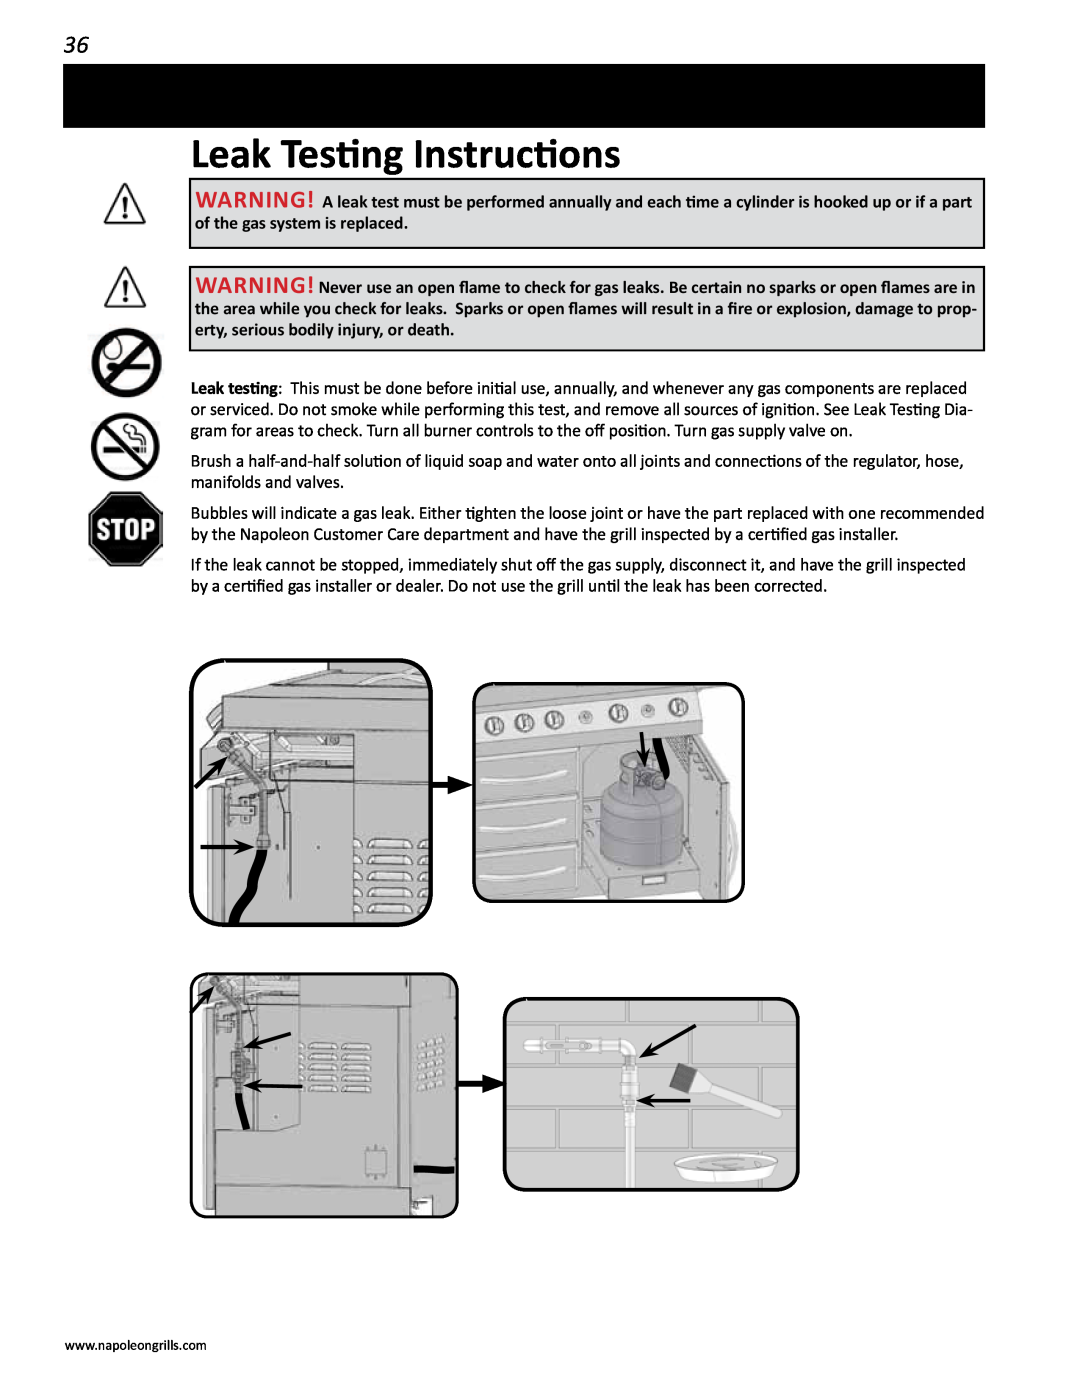 Napoleon Grills V 600, V 450 manual Leak Testing Instructions 